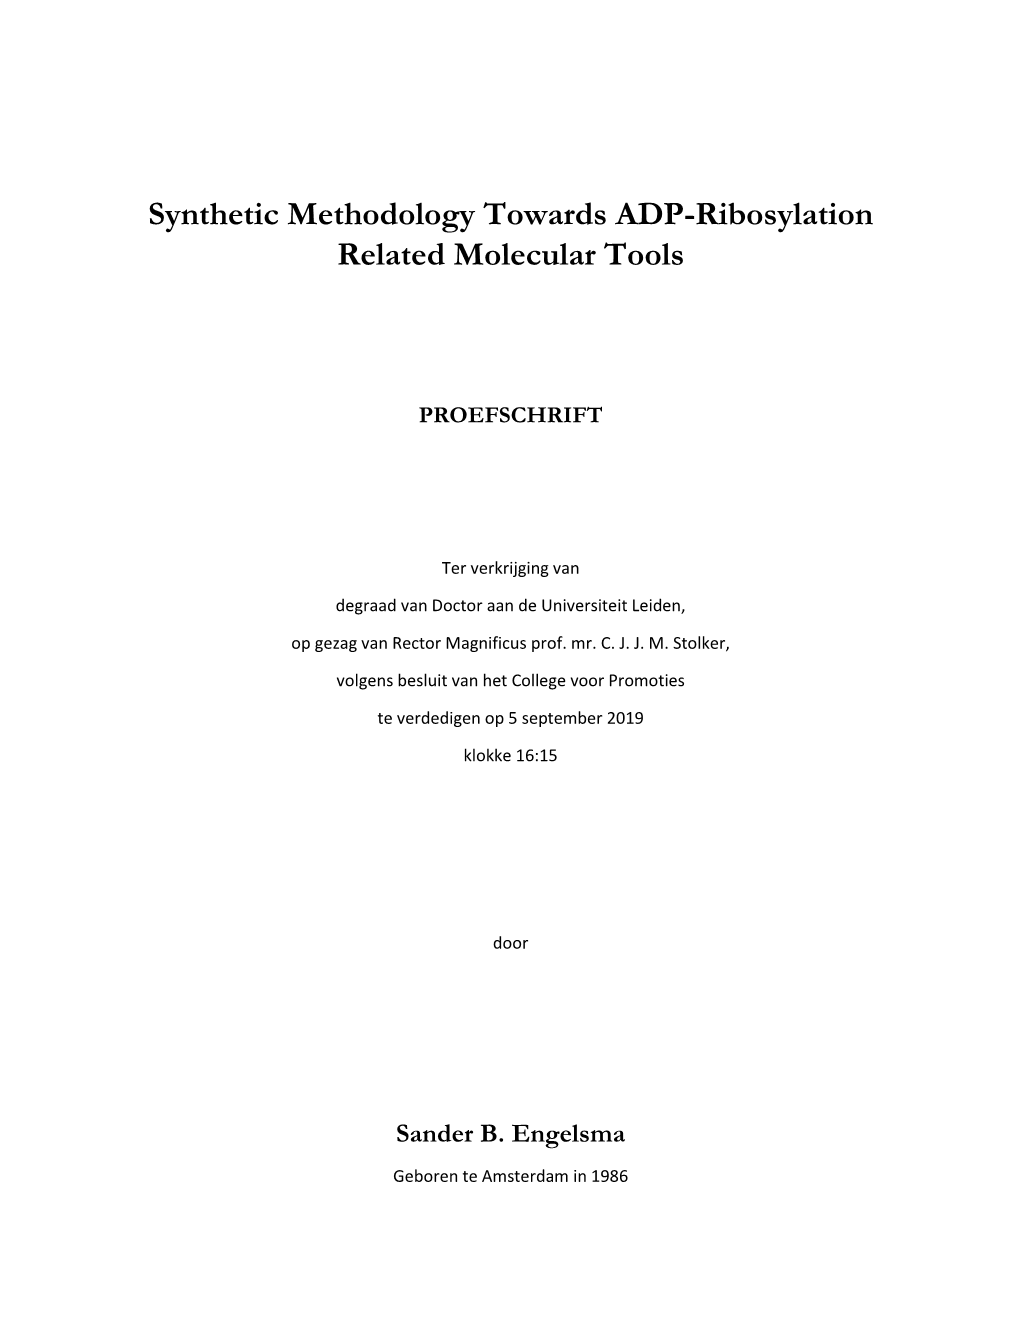 Synthetic Methodology Towards ADP-Ribosylation Related Molecular Tools